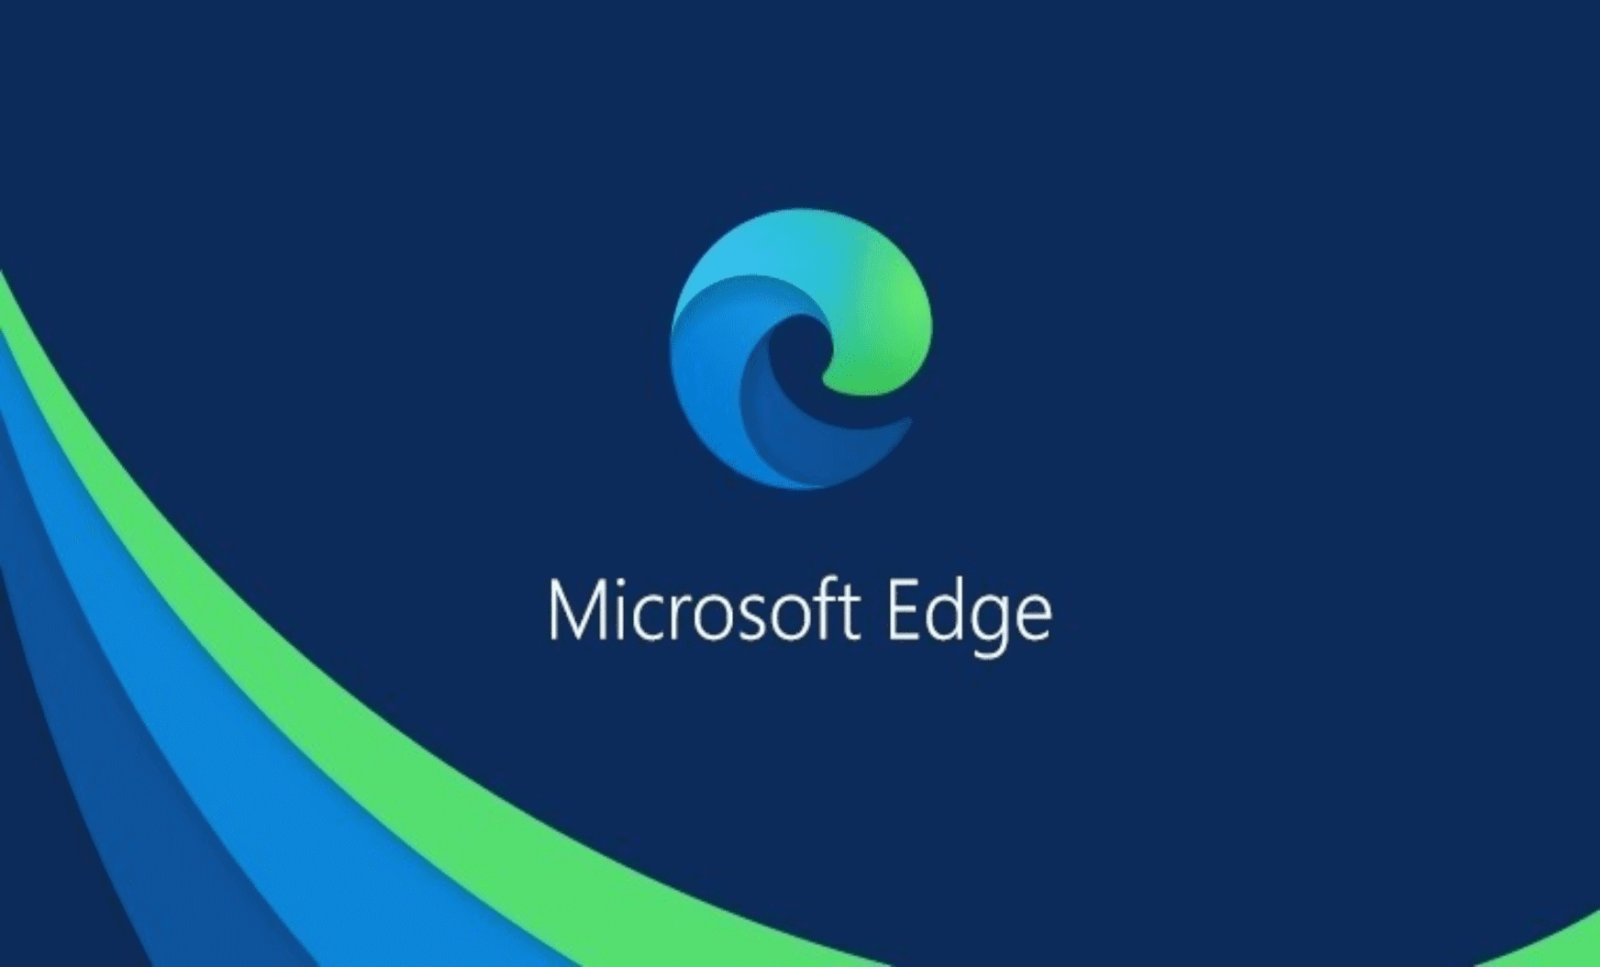 Microsoft Edge ya permite enviar pestañas